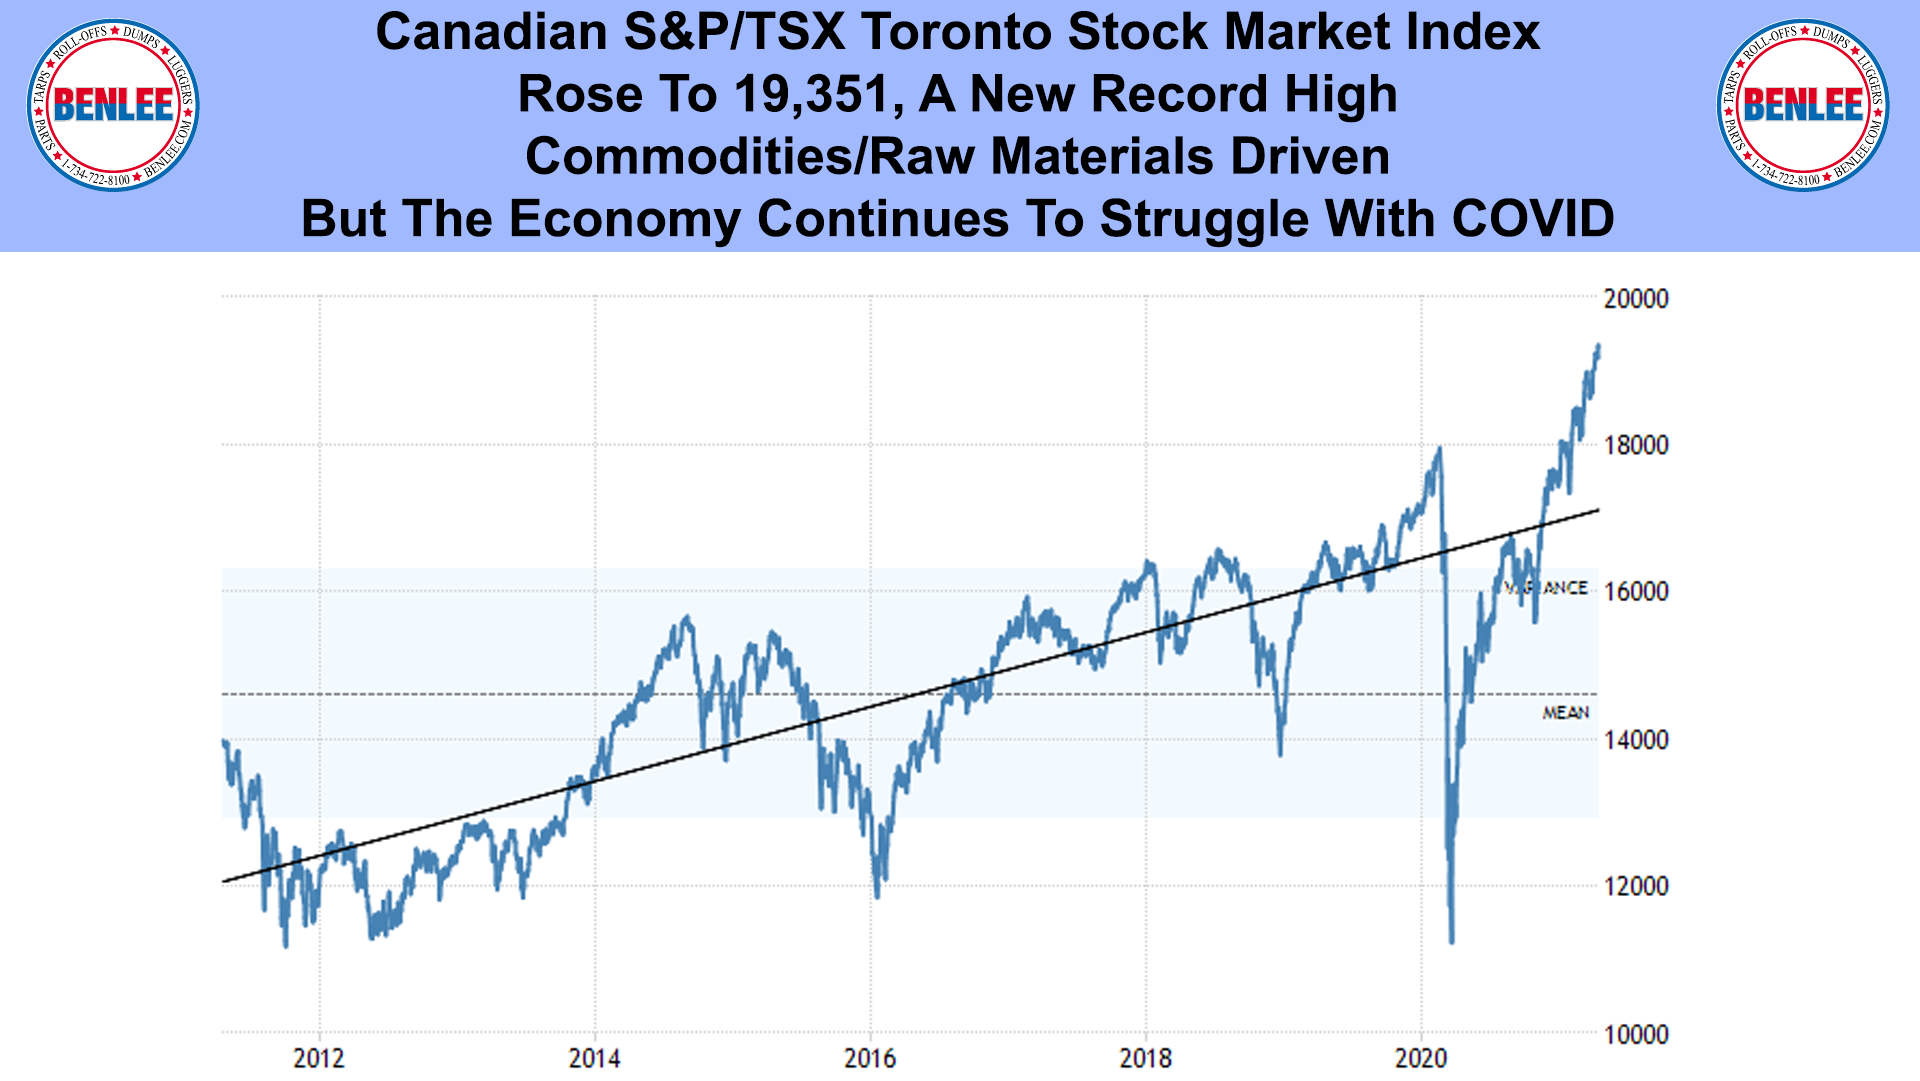 Canadian S&P TSX Toronto Stock Market Index